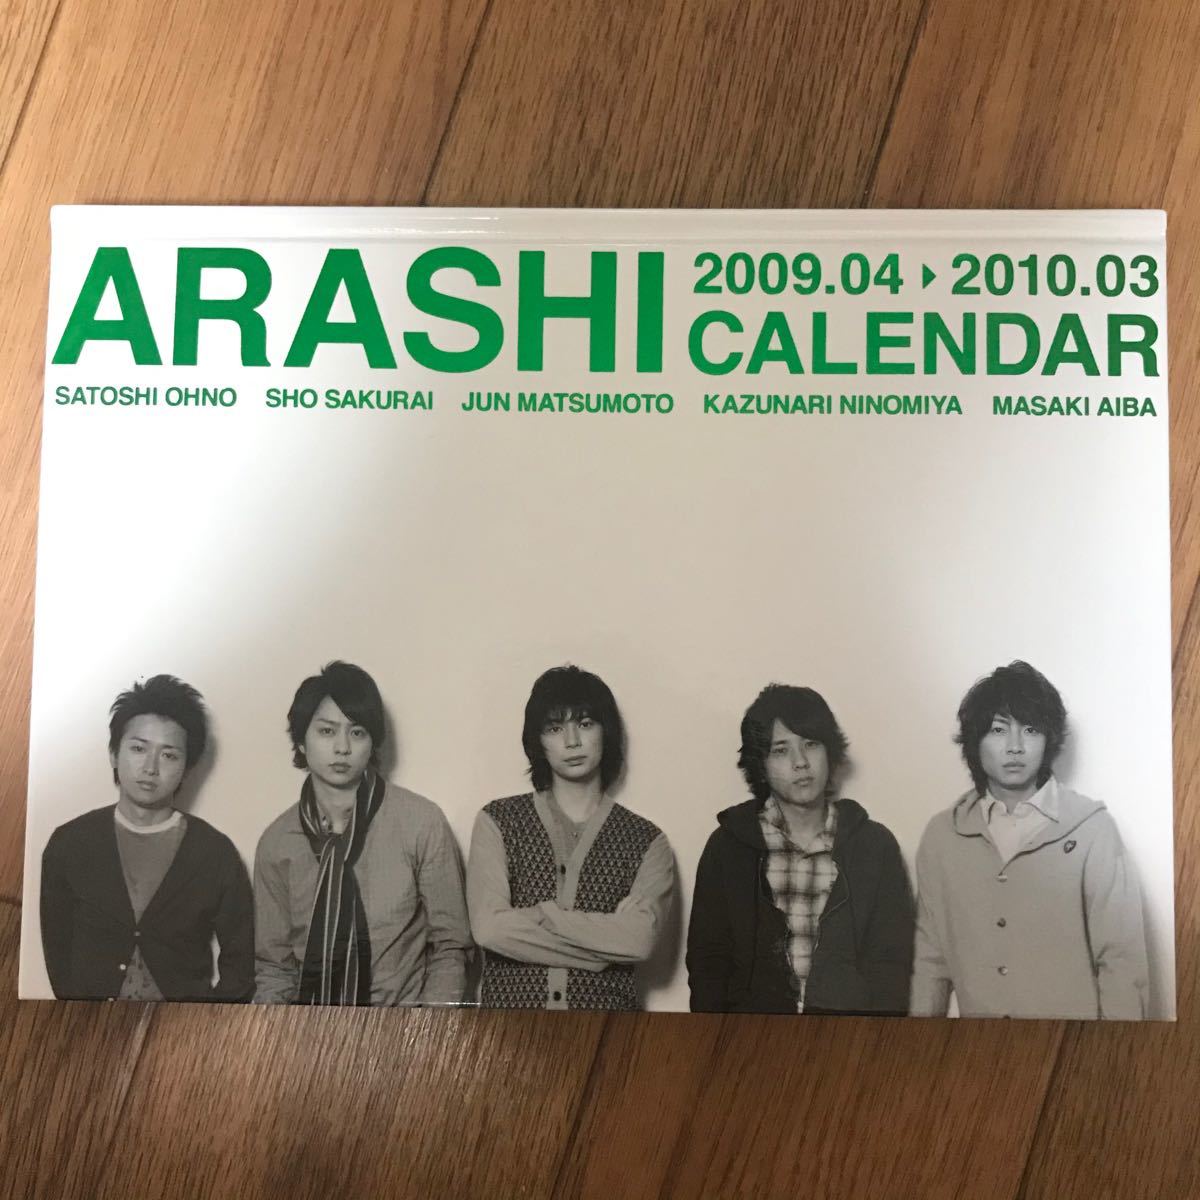 Arashi calendar 2009.04-2010.03